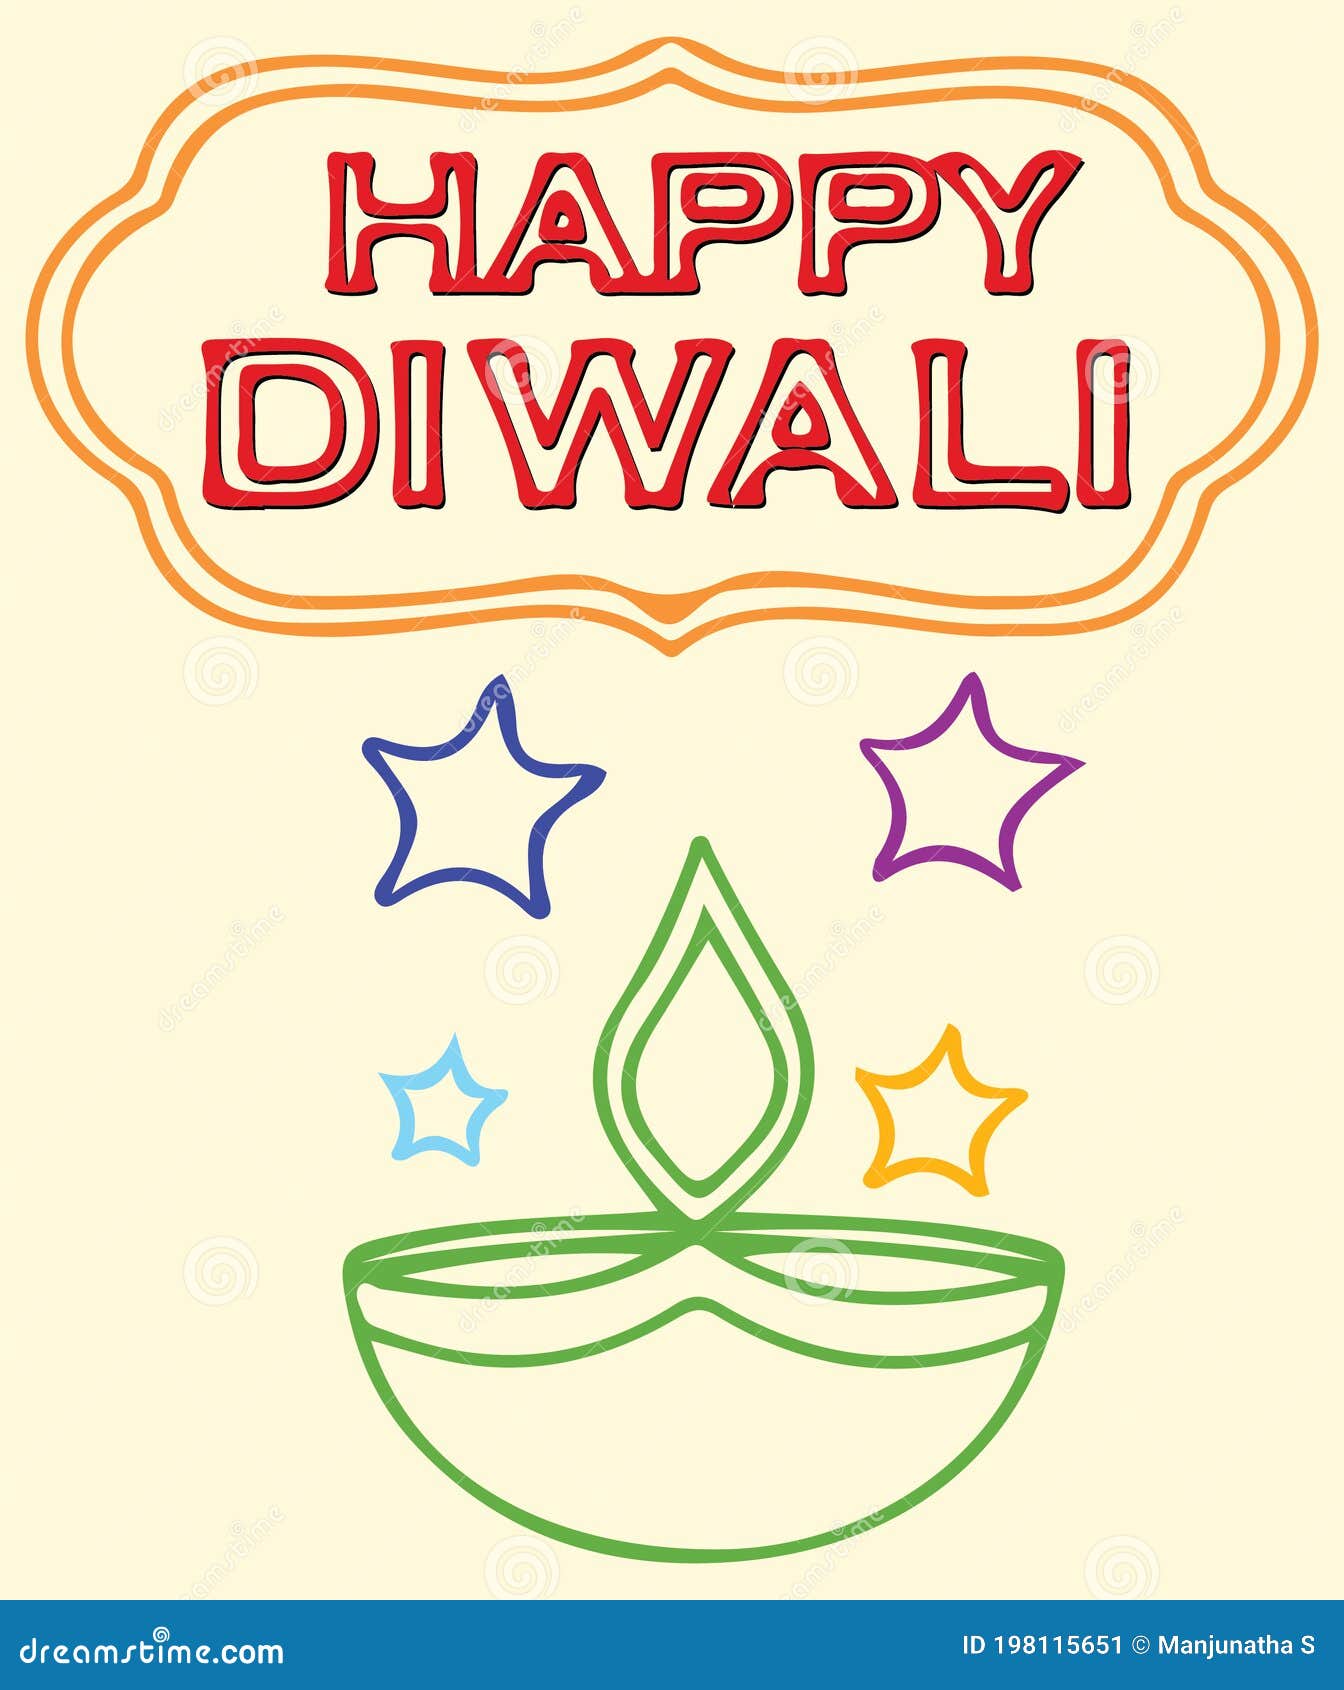 Colorful and easy Diwali Card - HNDMD Blog